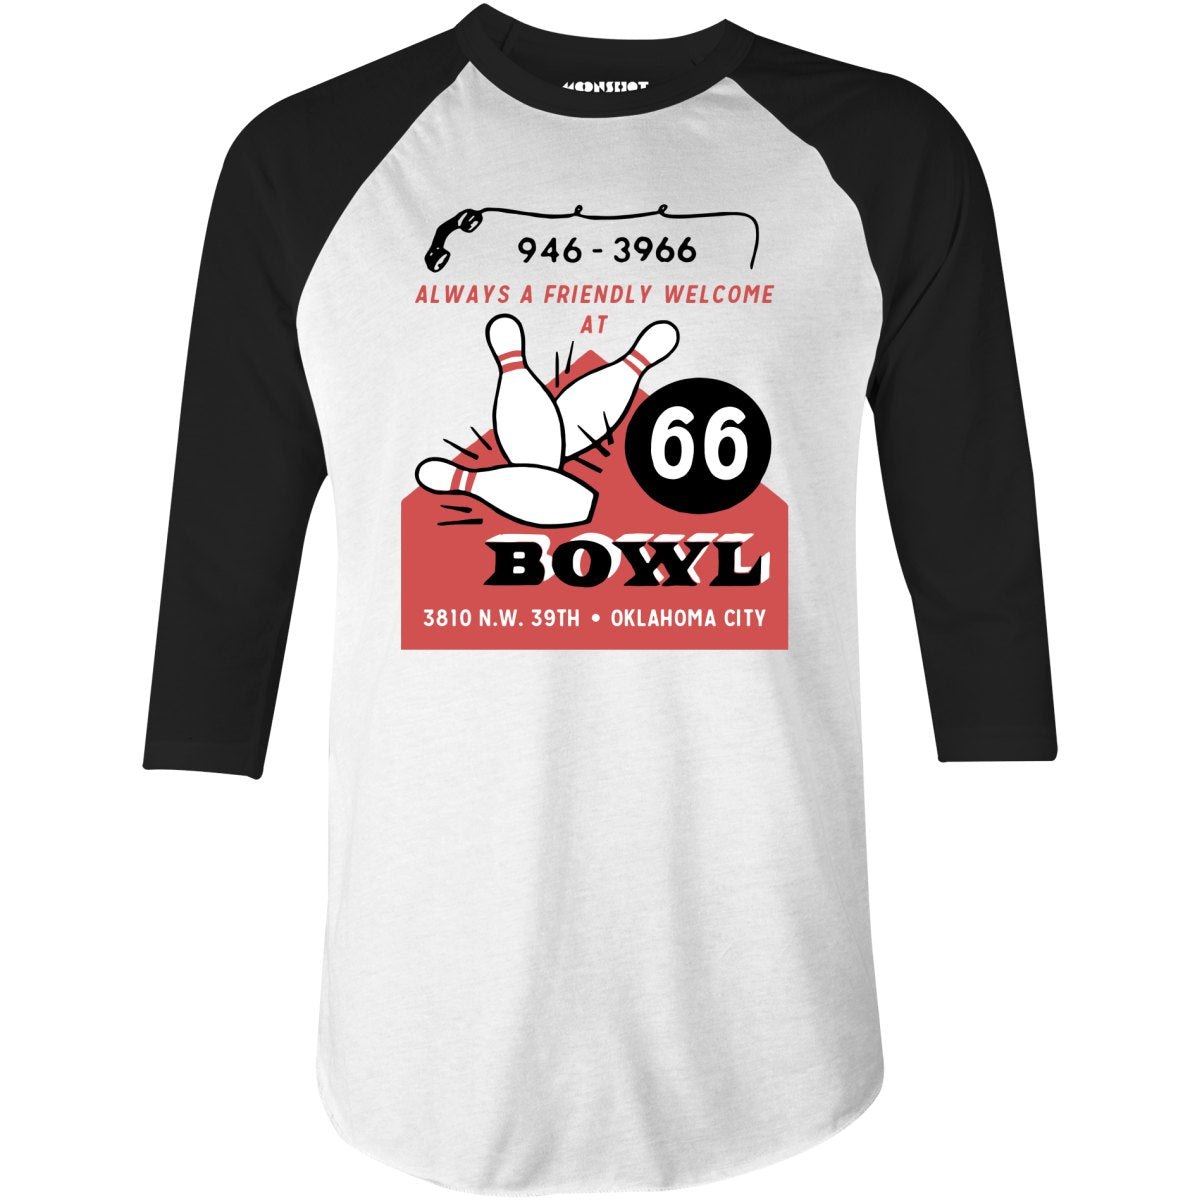 66 Bowl - Oklahoma City, OK - Vintage Bowling Alley - 3/4 Sleeve Raglan T-Shirt